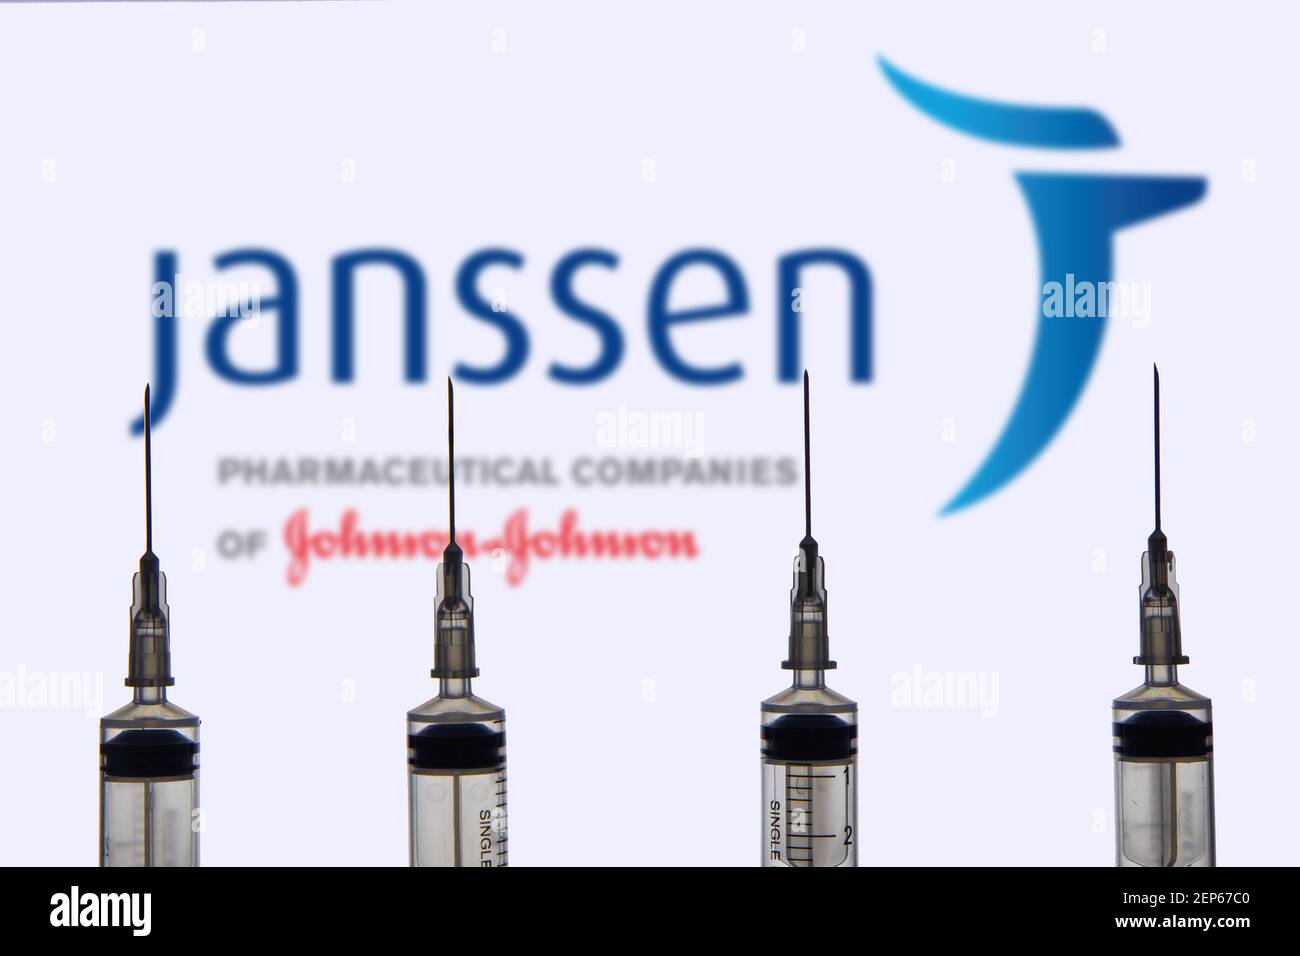 Kathmandu, Nepal - February 26 2021: Janssen Pharmaceutical Companies logo against Syringe or Inject needle. Johnson and Johnson's Coronavirus vaccine Stock Photo